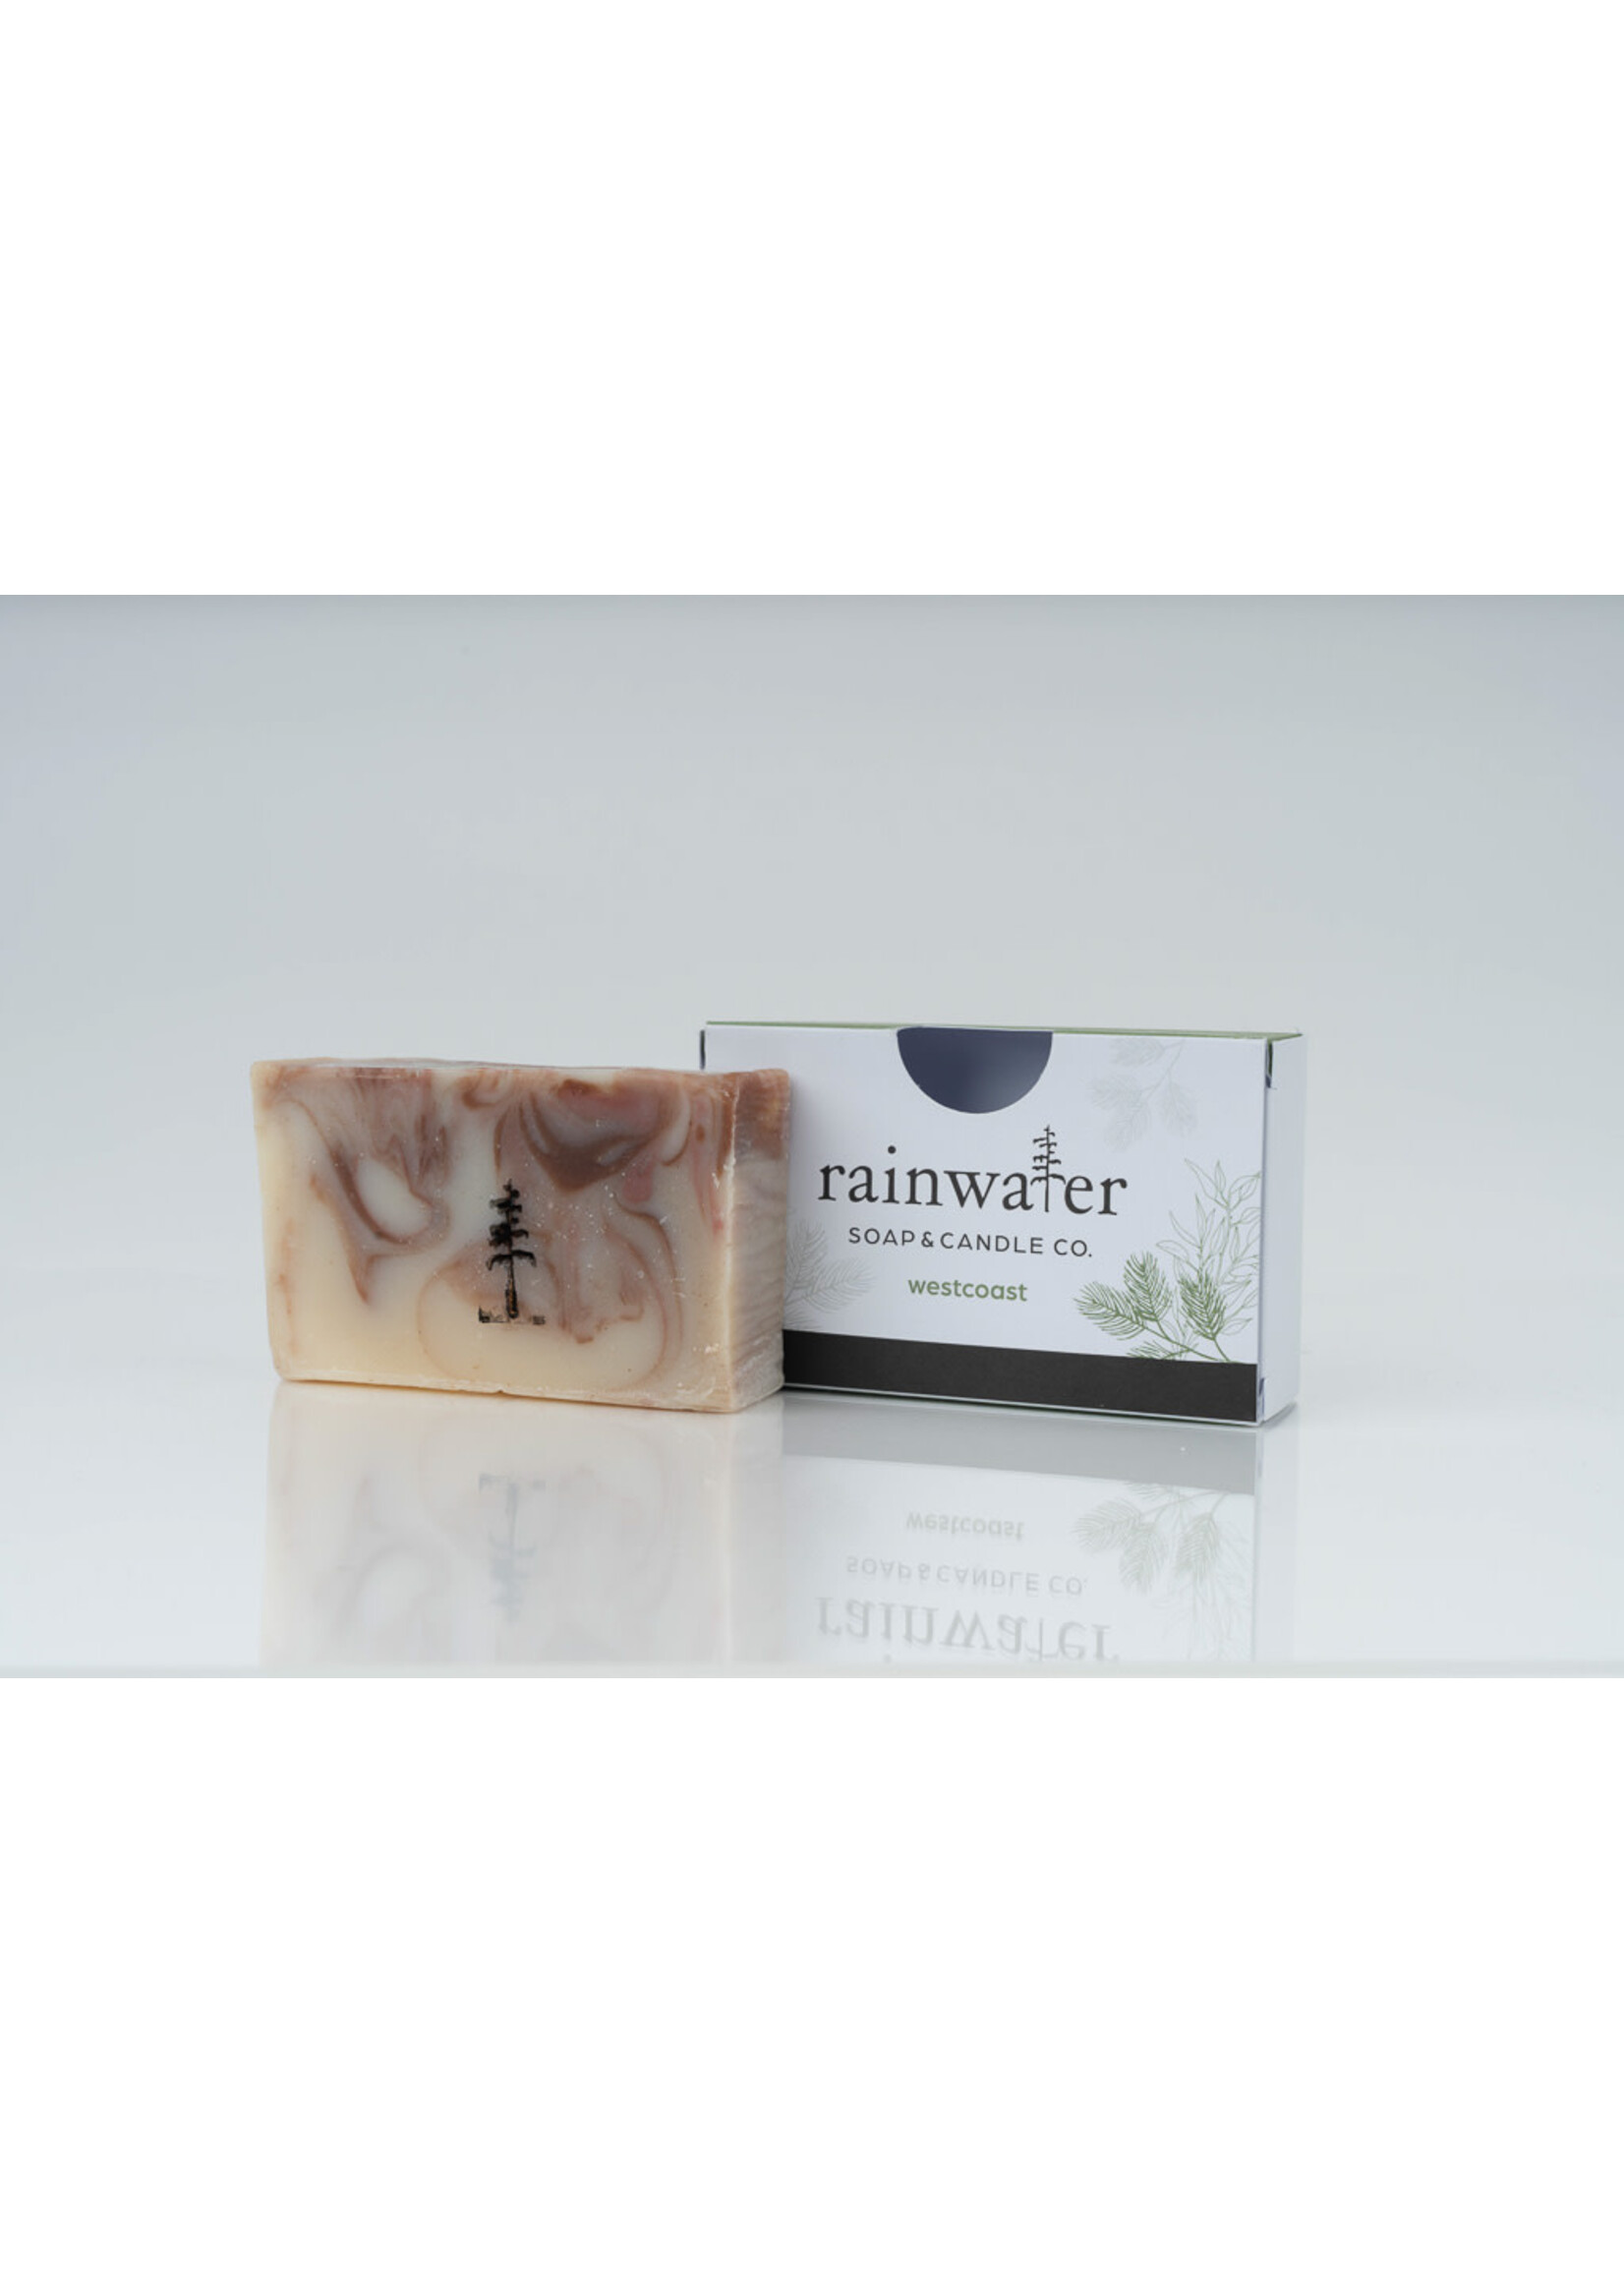 Rainwater Soap & Candle Co Westcoast Soap